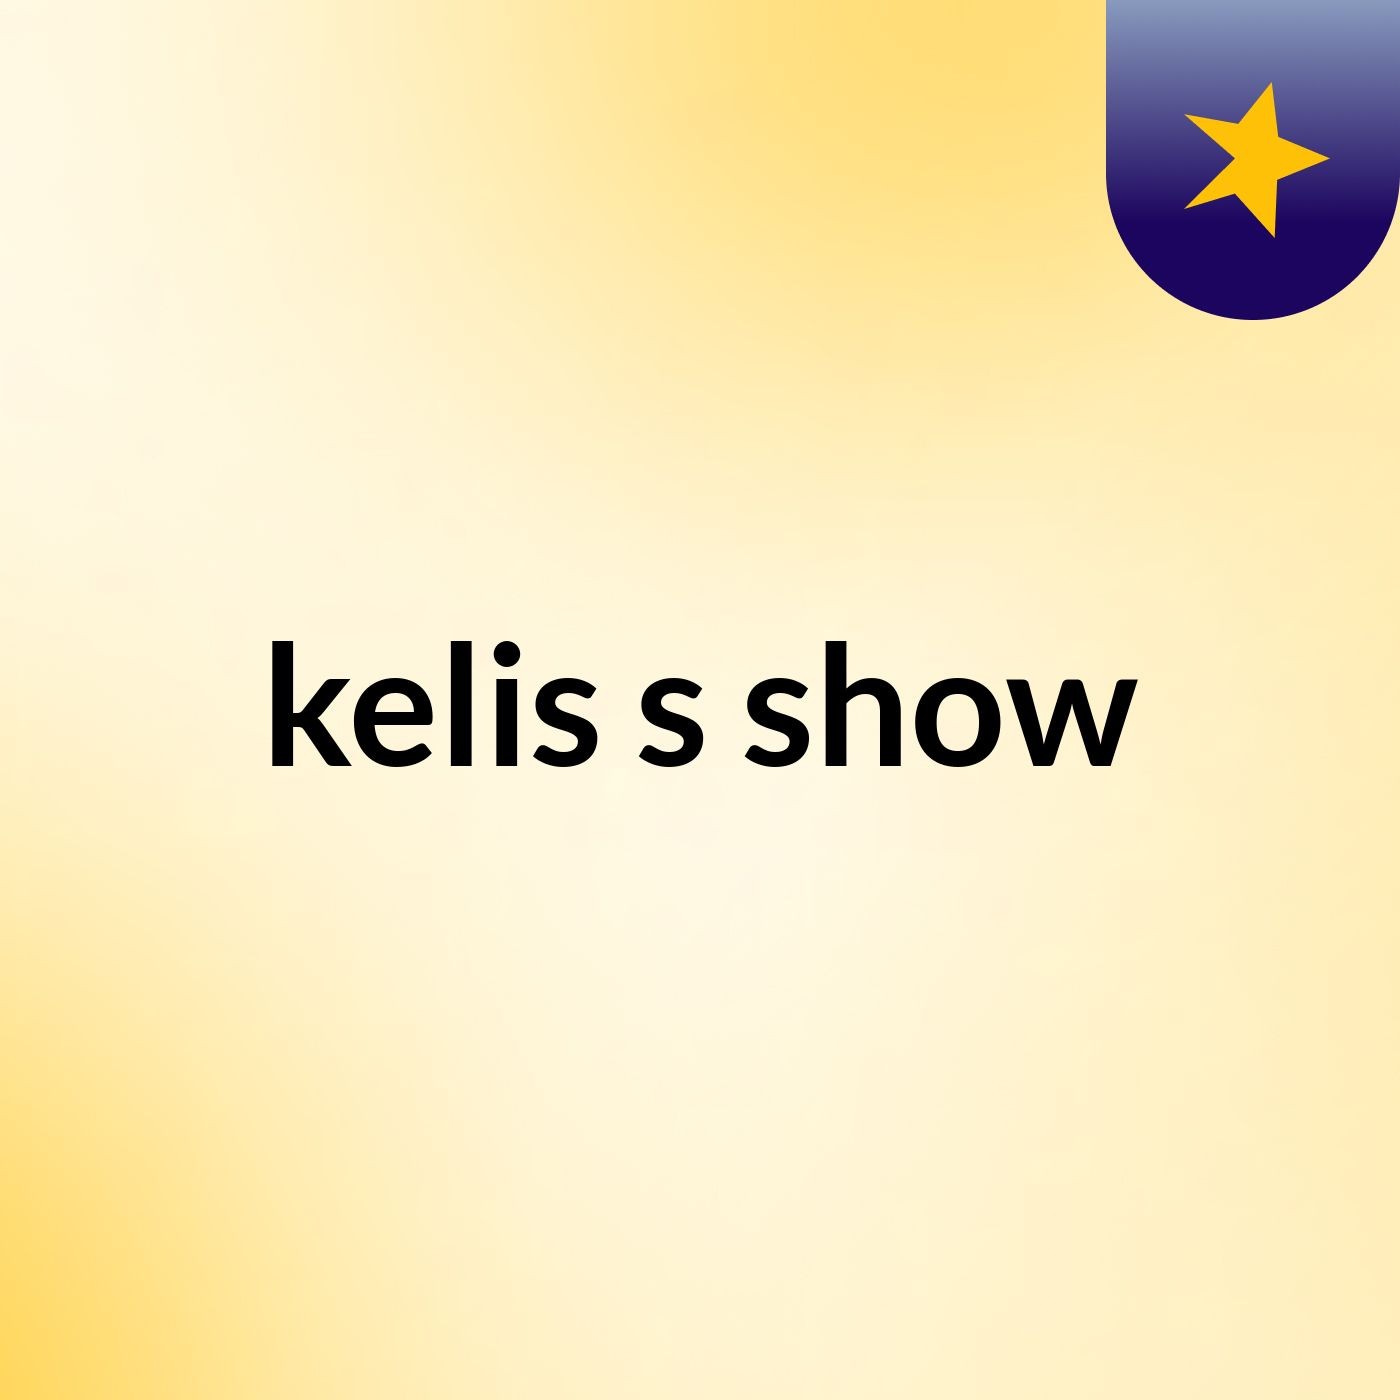 kelis's show